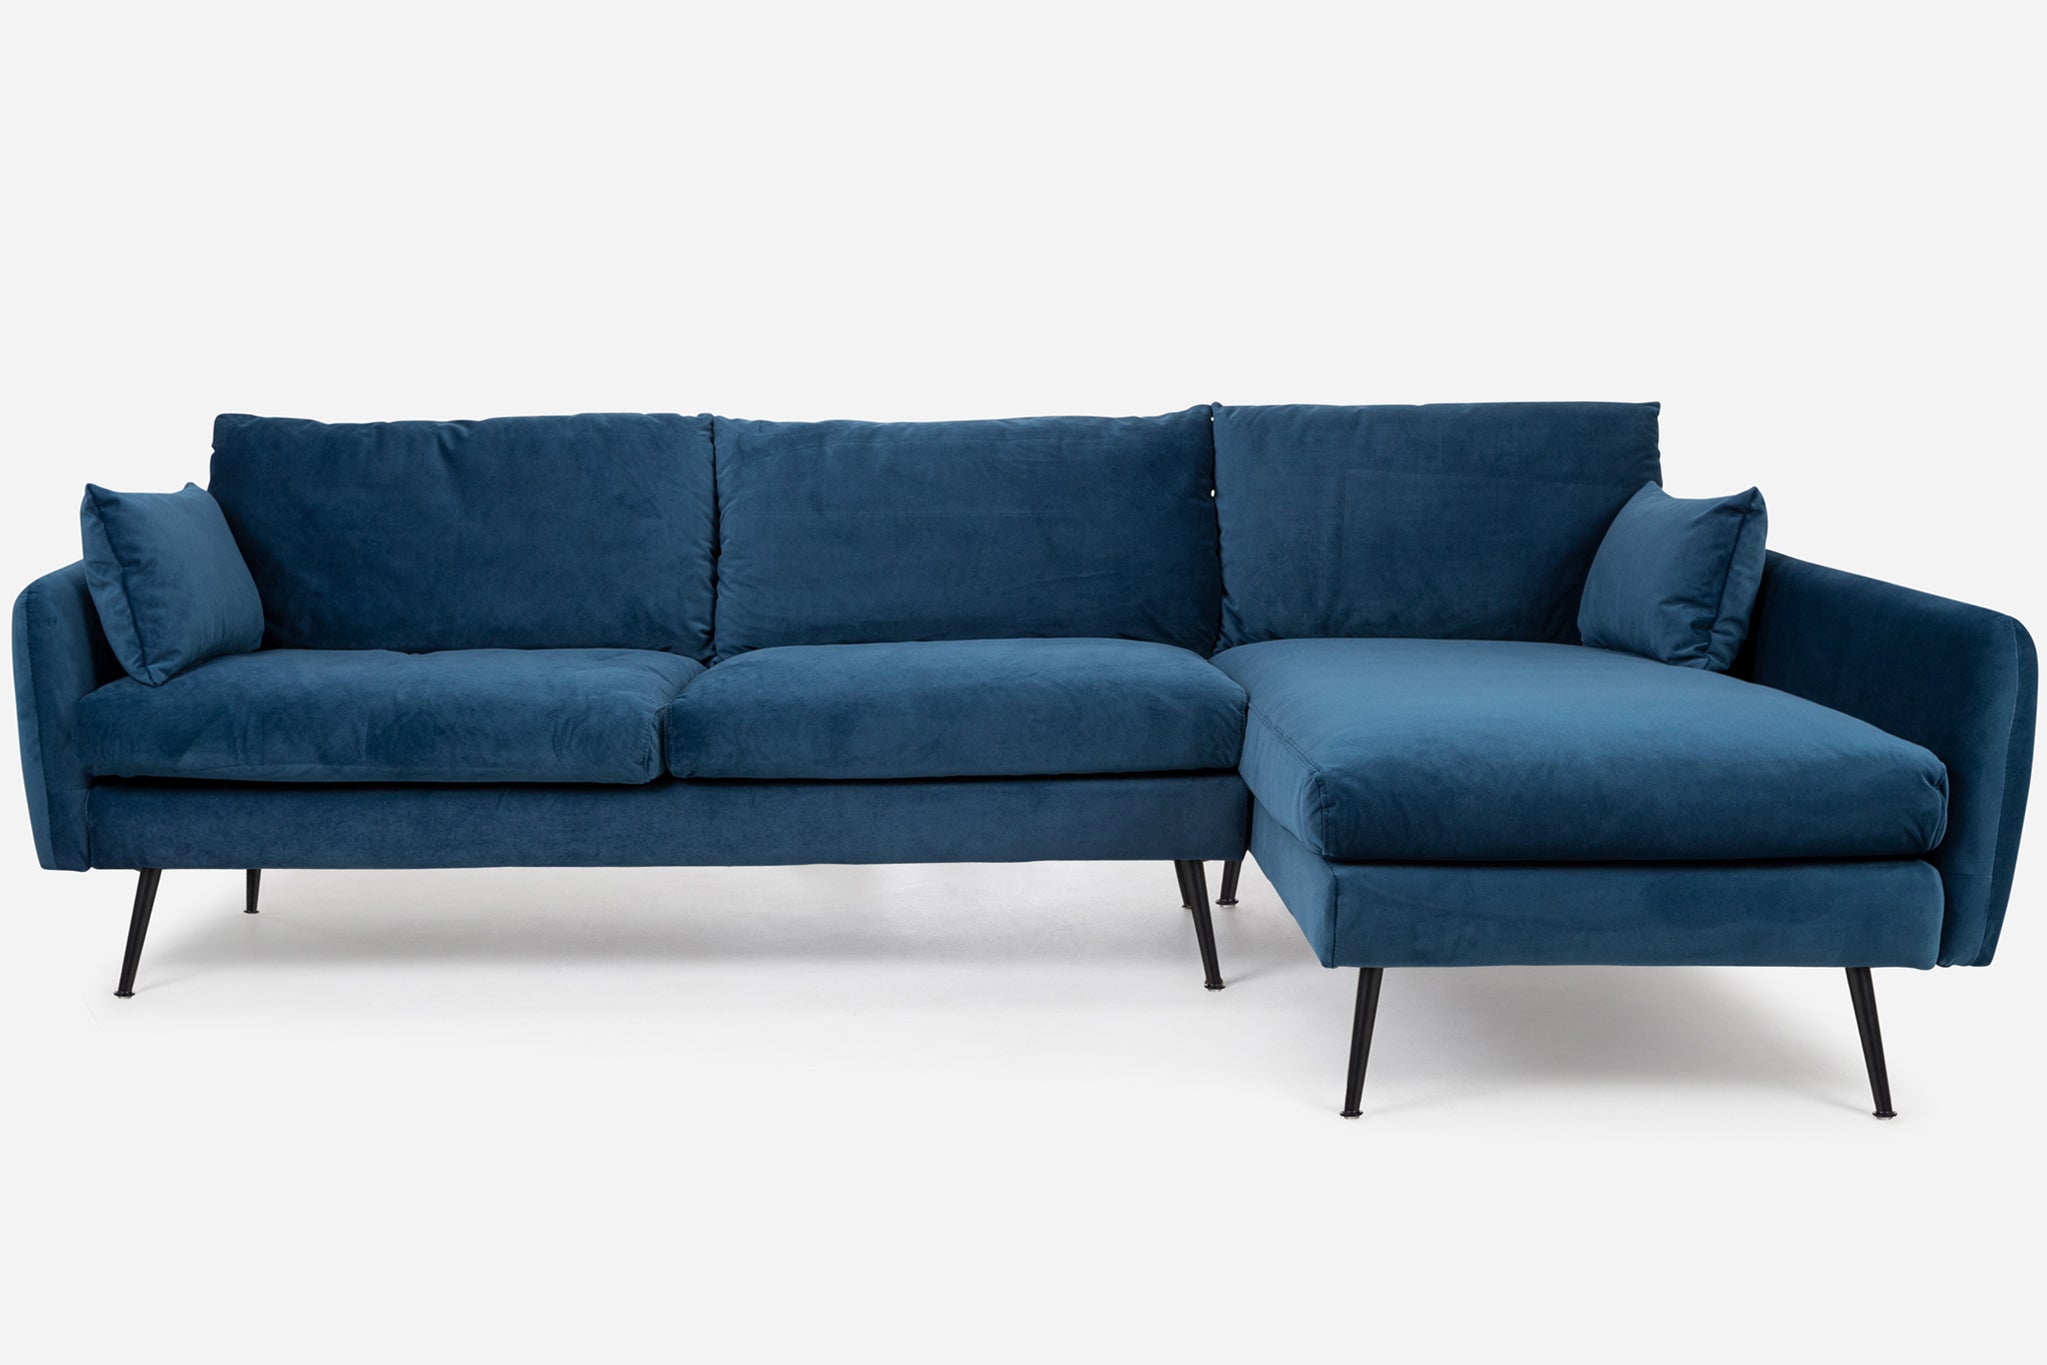 park sectional sofa shown in blue velvet with black legs right facing